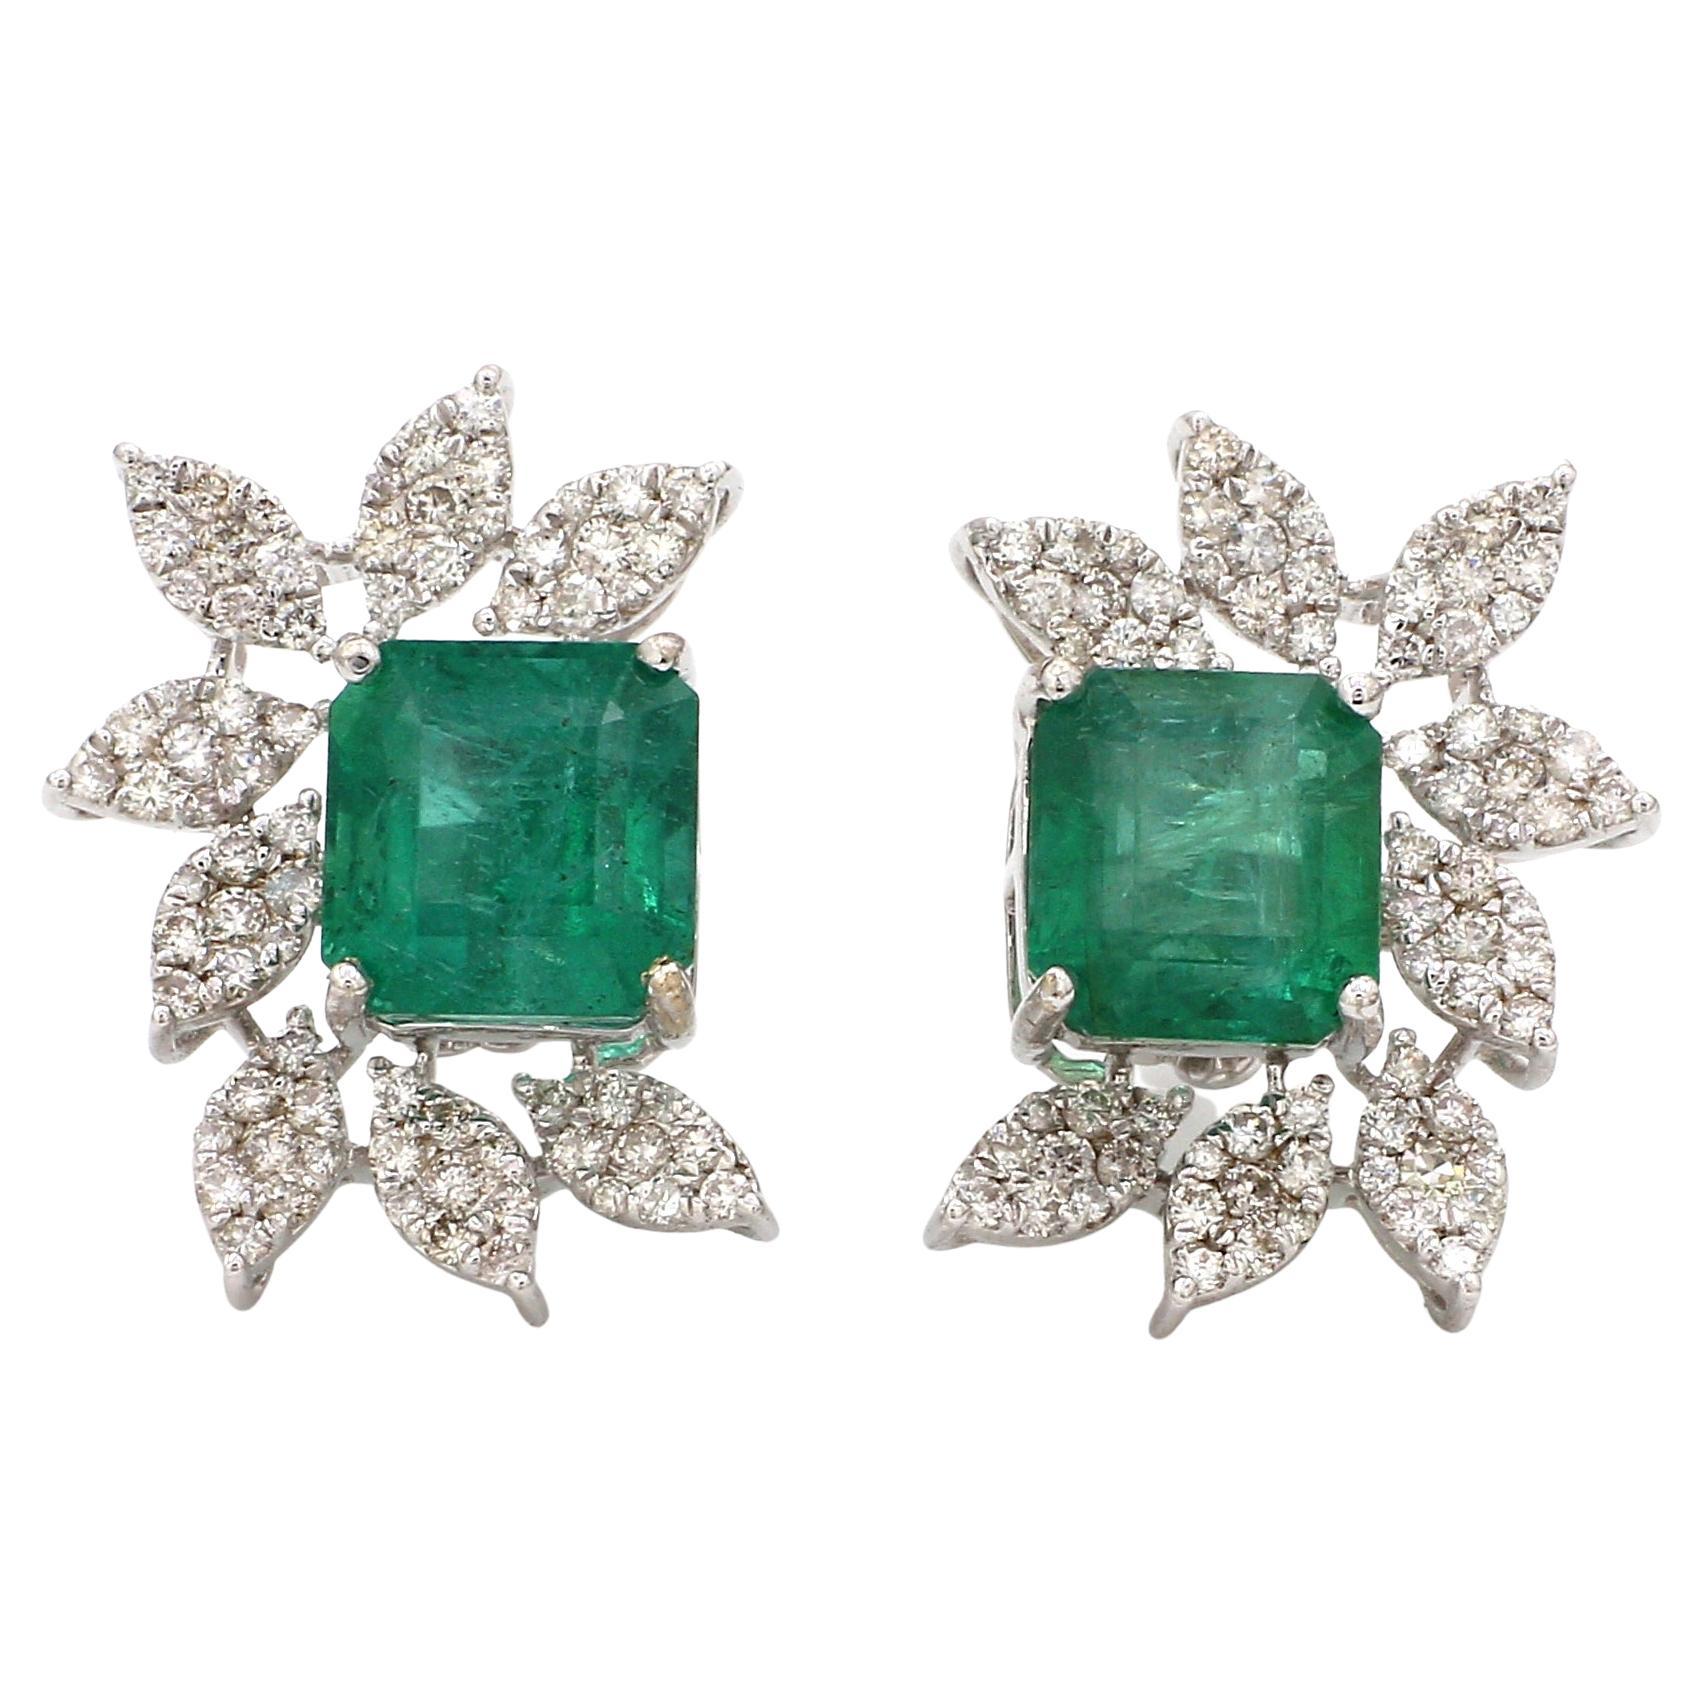 Real Natural Emerald Stud Earrings Diamond 14 Karat White Gold Handmade Jewelry